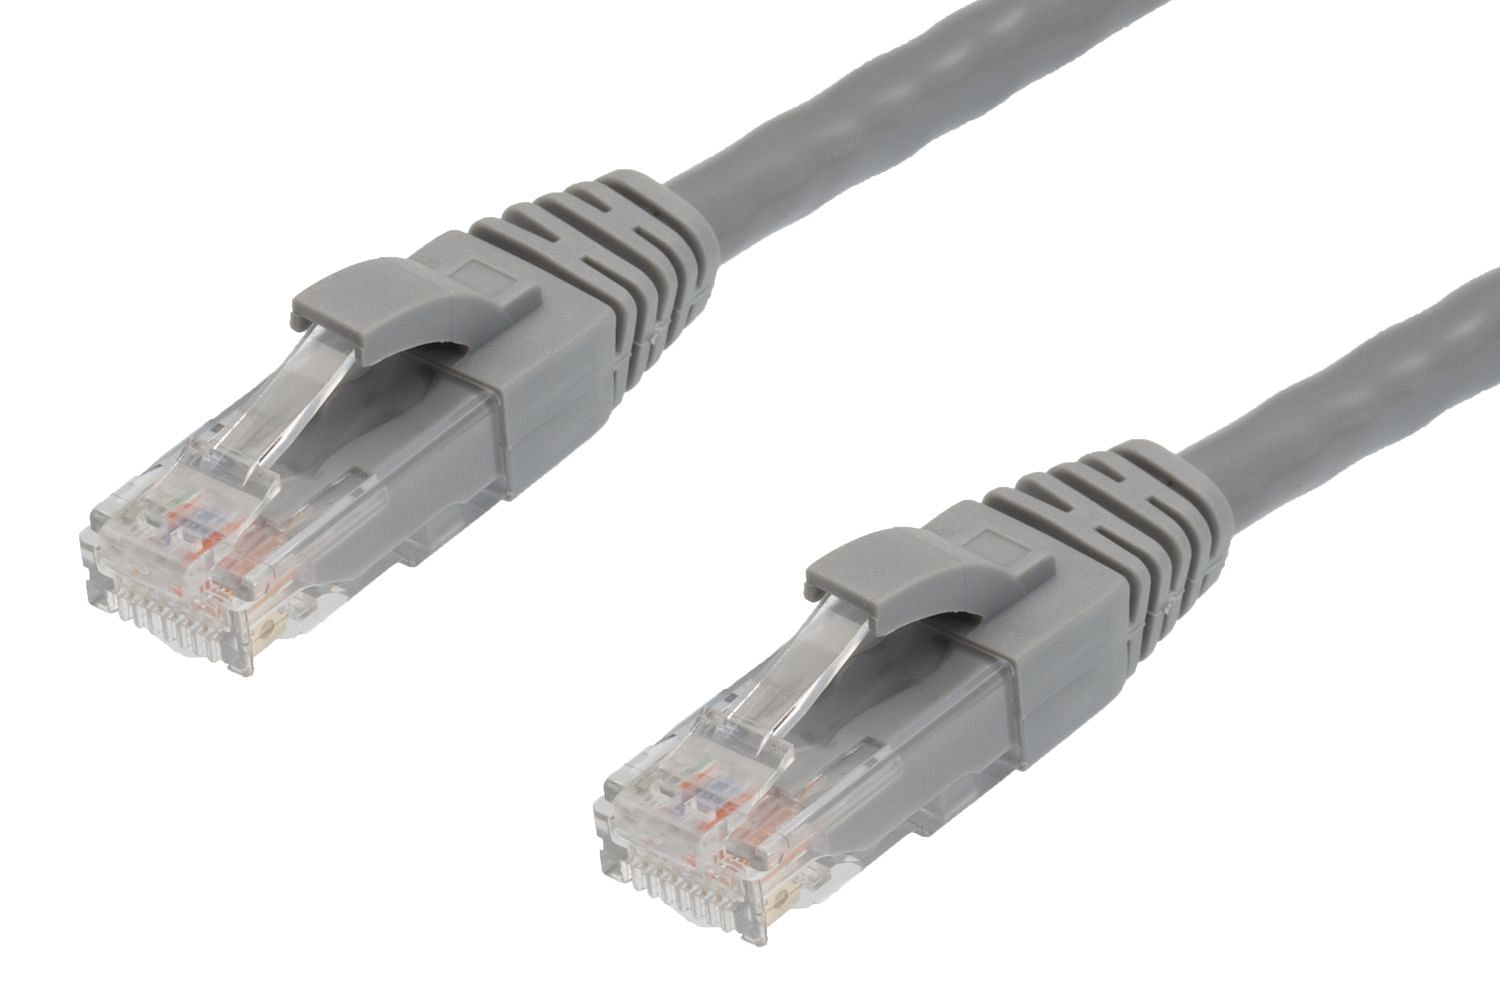 0.5m cat5 ethernet patch cable